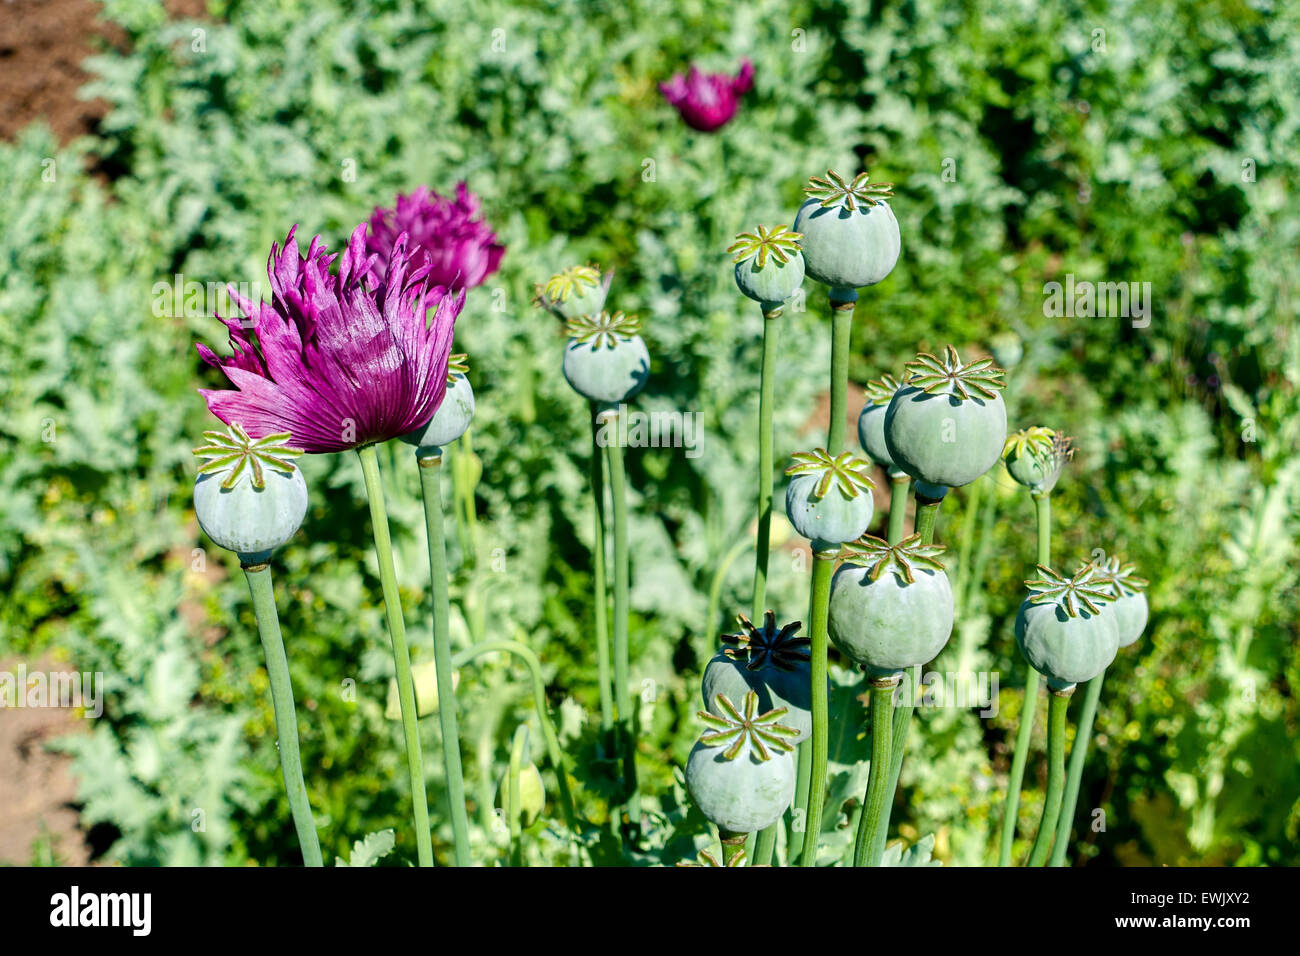 Mohn-Blumen und Samenköpfe, Opium, Drogen, Krieg gegen Drogen, heroin Stockfoto